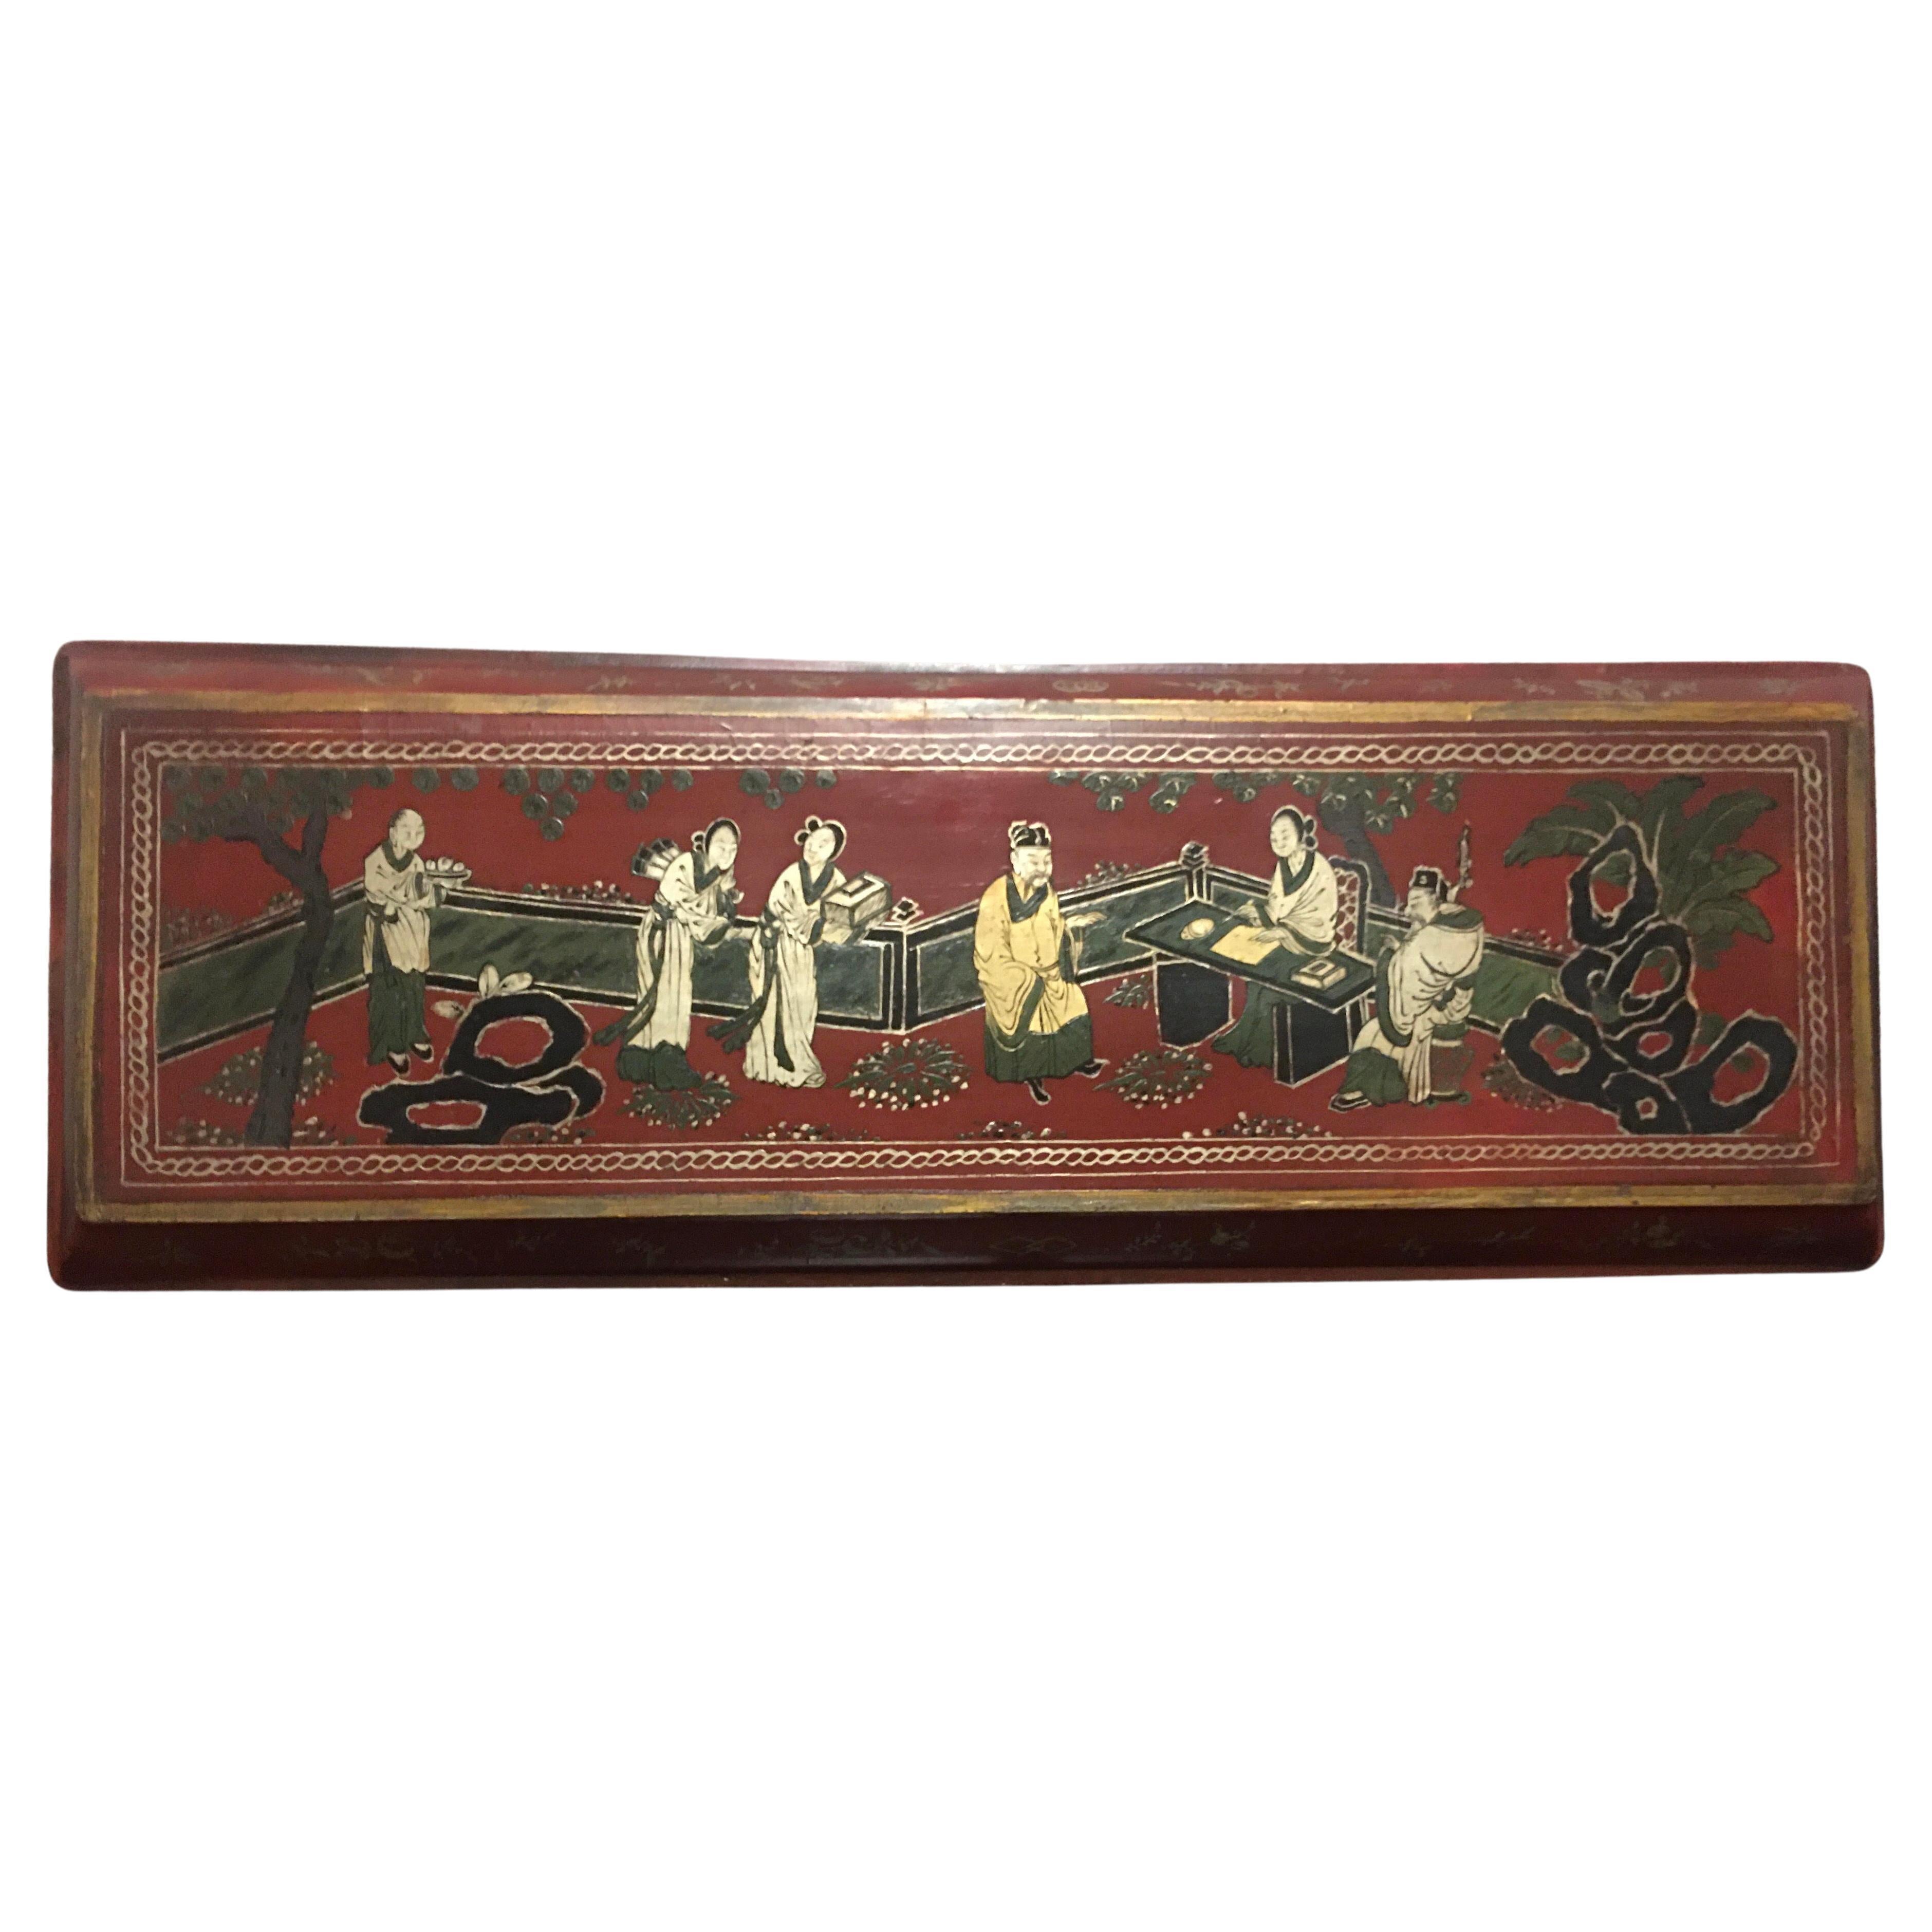 Chinese 18th Century Qing Dynasty Scroll Box